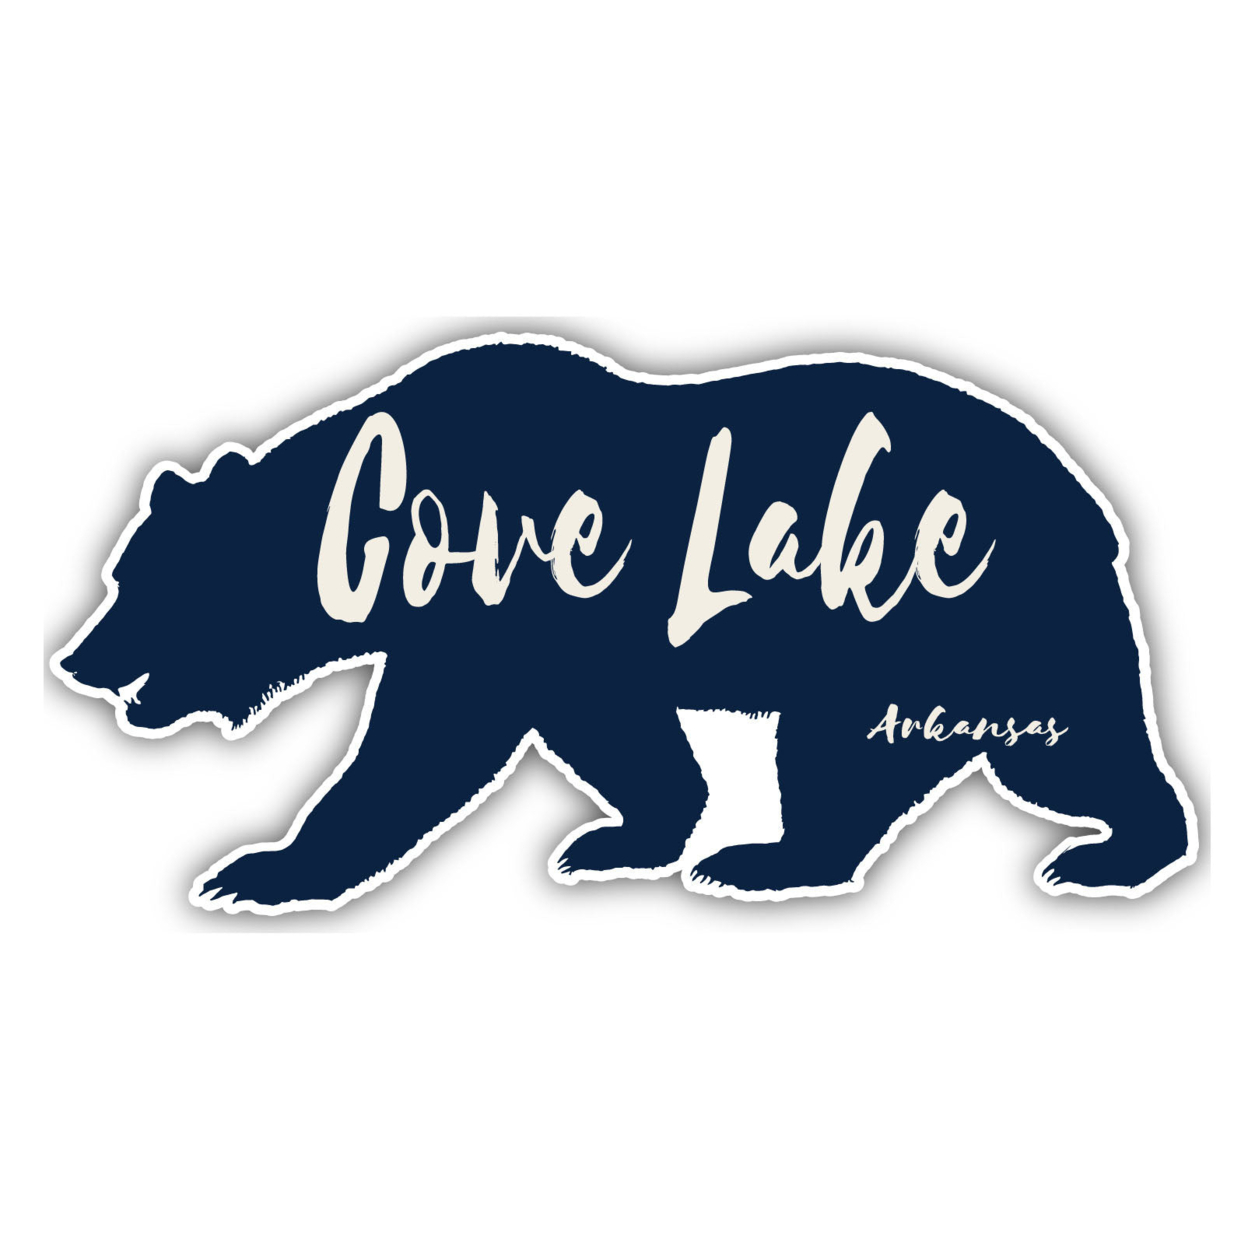 Cove Lake Arkansas Souvenir Decorative Stickers (Choose Theme And Size) - 4-Pack, 10-Inch, Bear